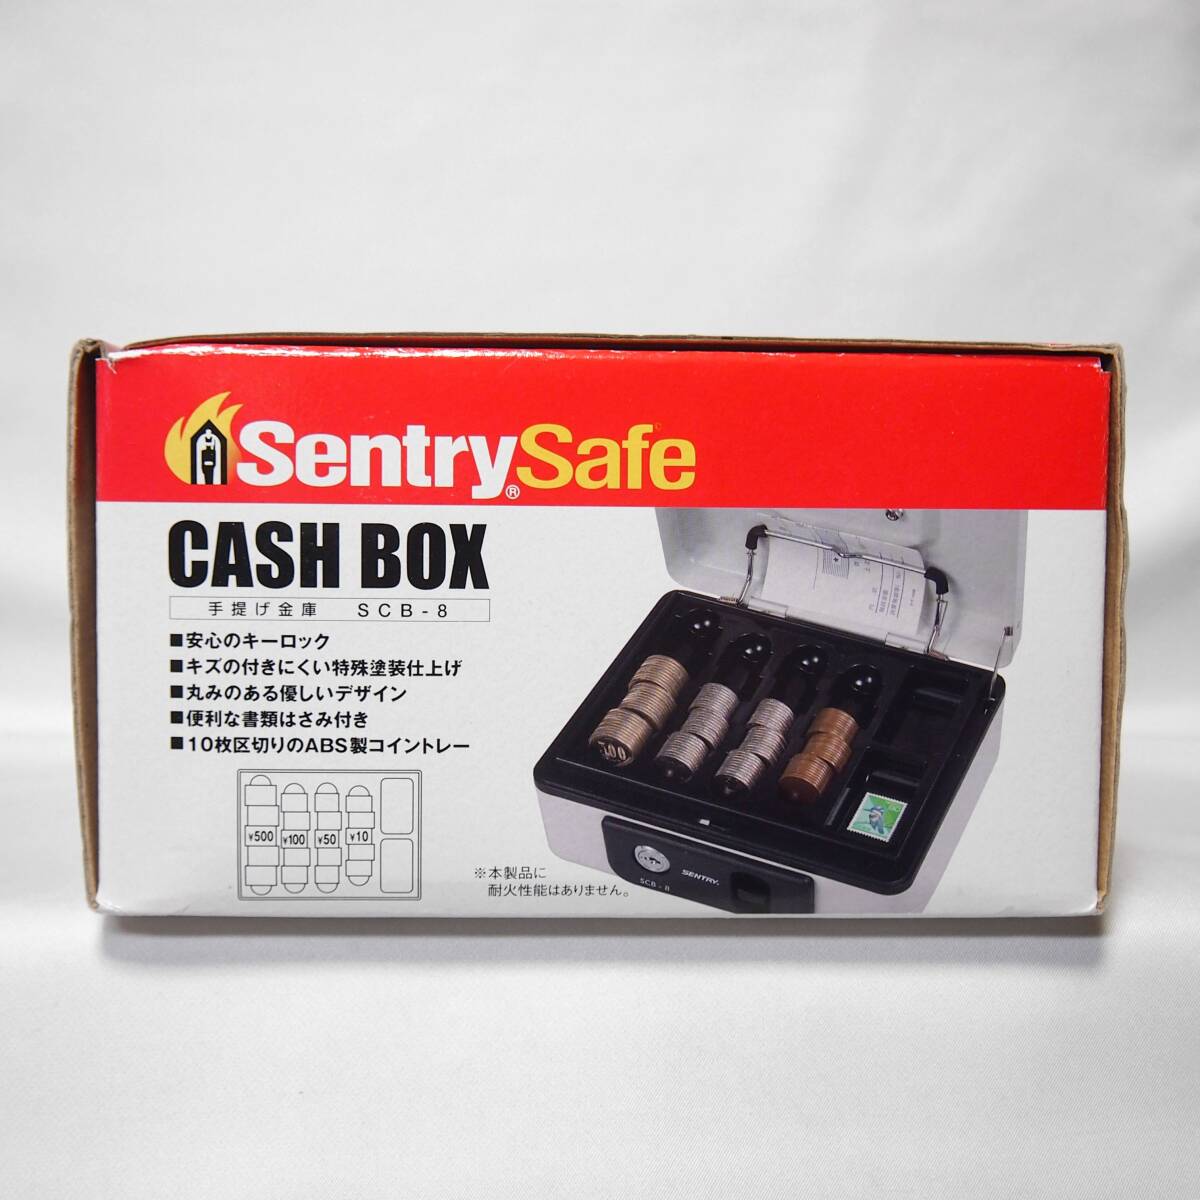 Sentry cent Lee * unused goods made of metal small size handbag safe cashbox key lock type SCB-8